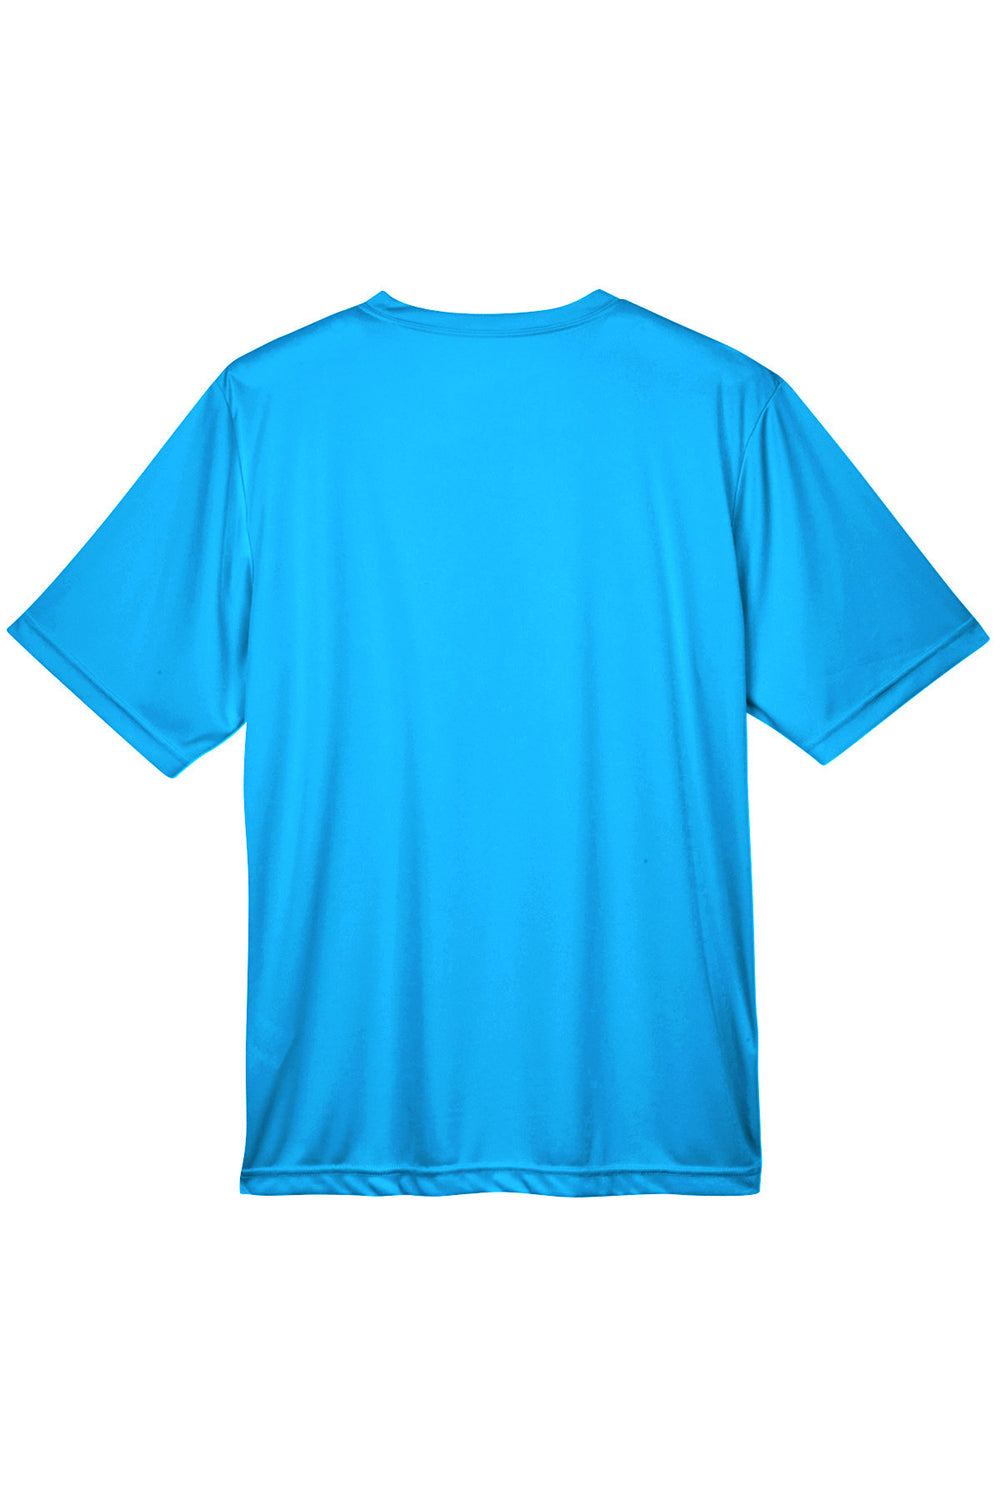 Team 365 TT11 Mens Zone Performance Moisture Wicking Short Sleeve Crewneck T-Shirt Electric Blue Flat Back